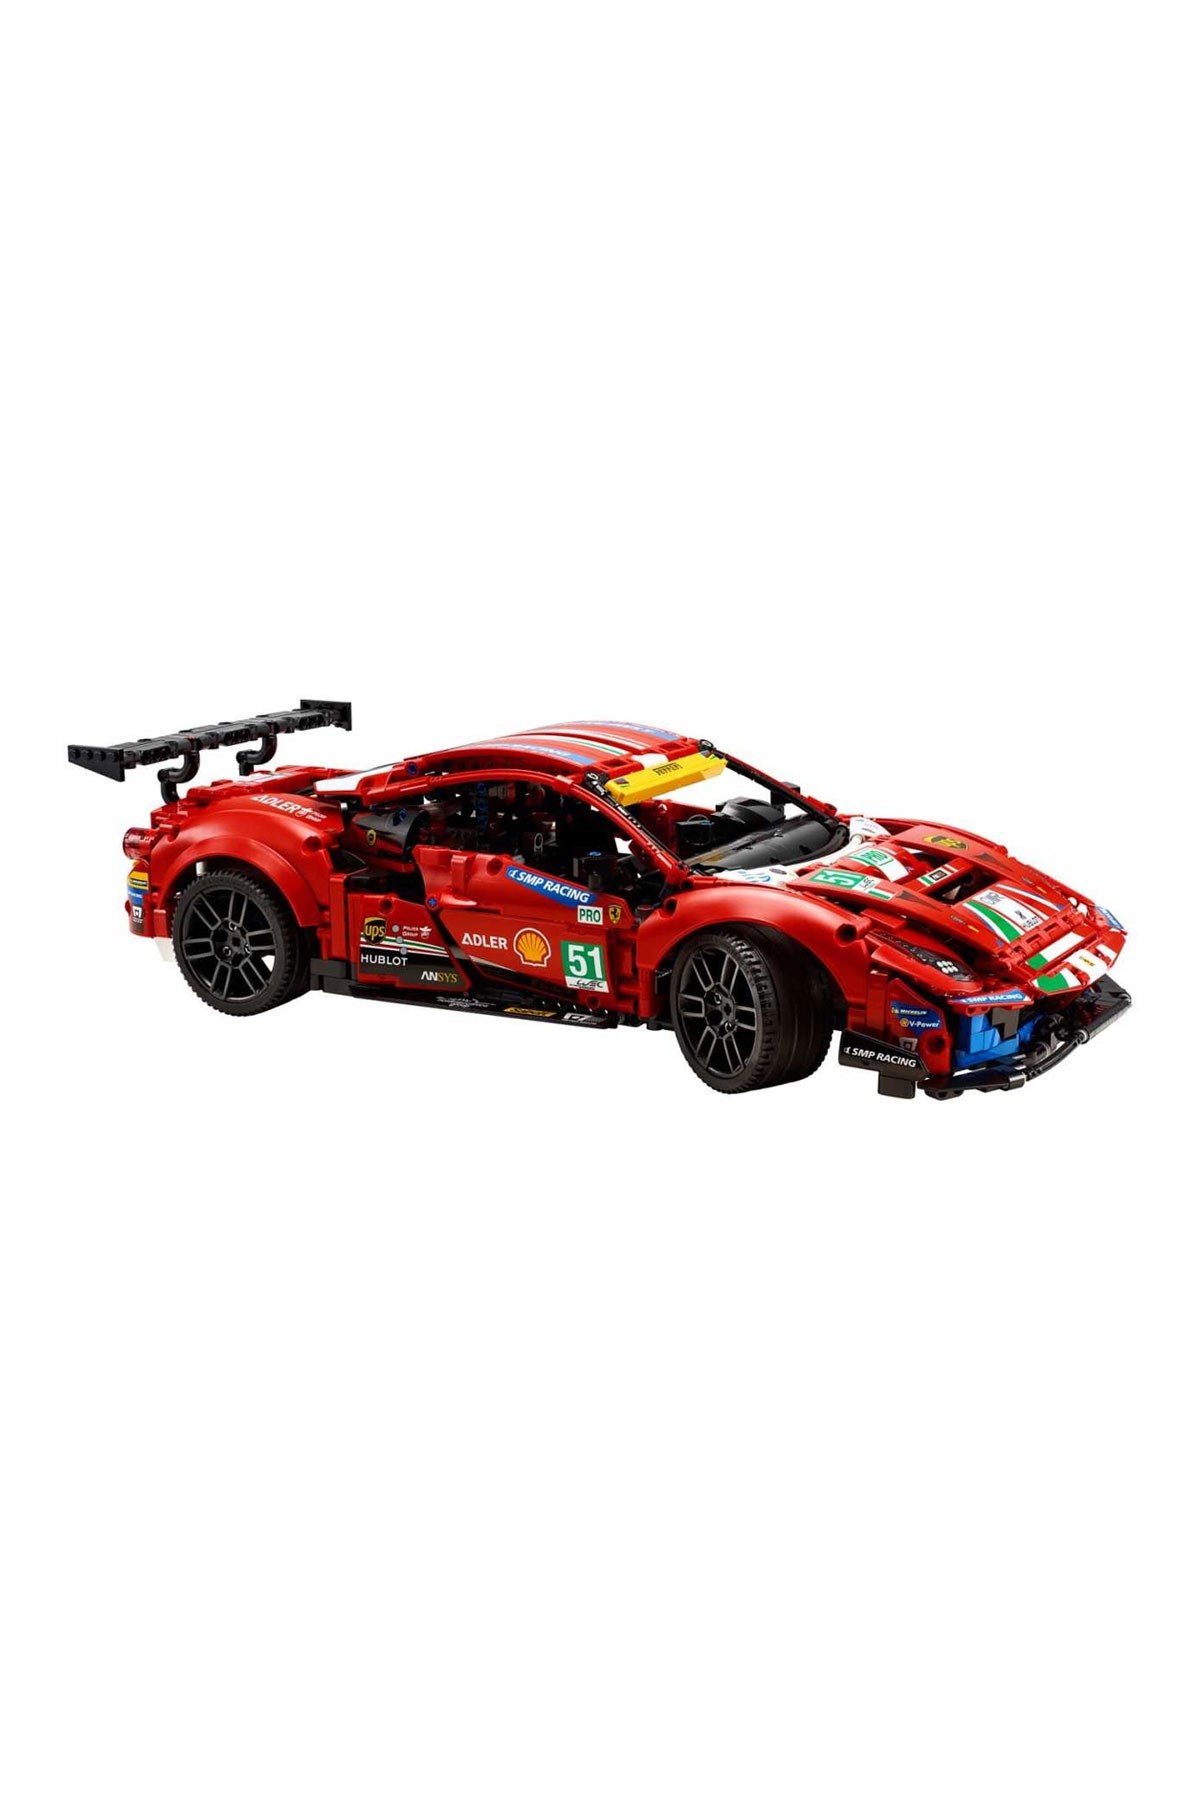 Lego Technic Ferrari 488 GTE AF Corse 51 42125